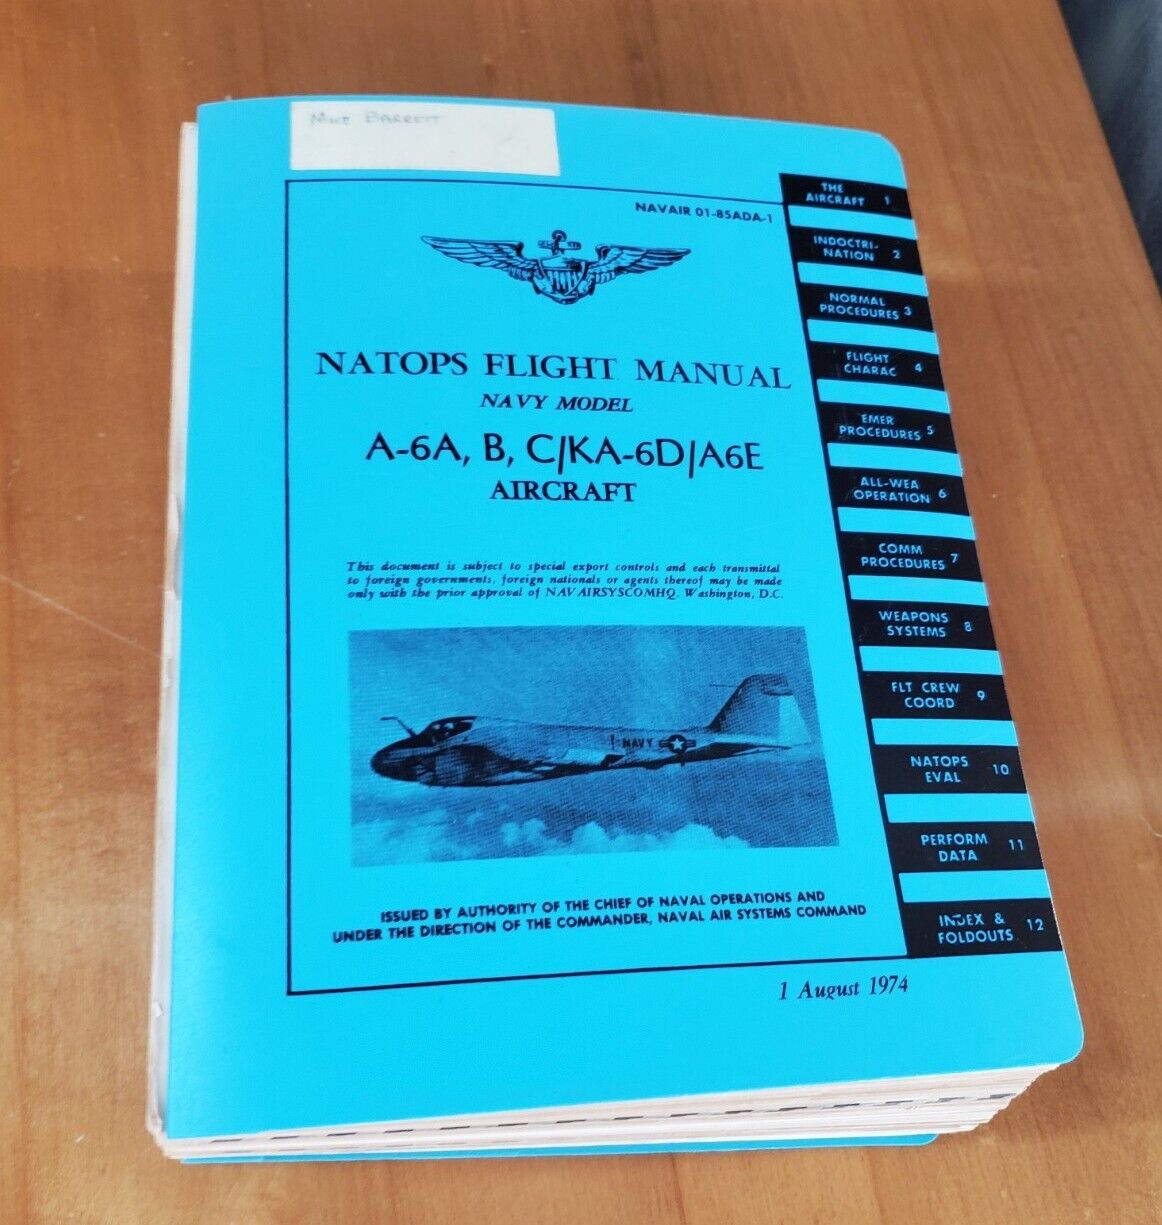 1974 Natops Flight Manual Navy Model A-6a,b,c/ka-6d/a6e Aircraft